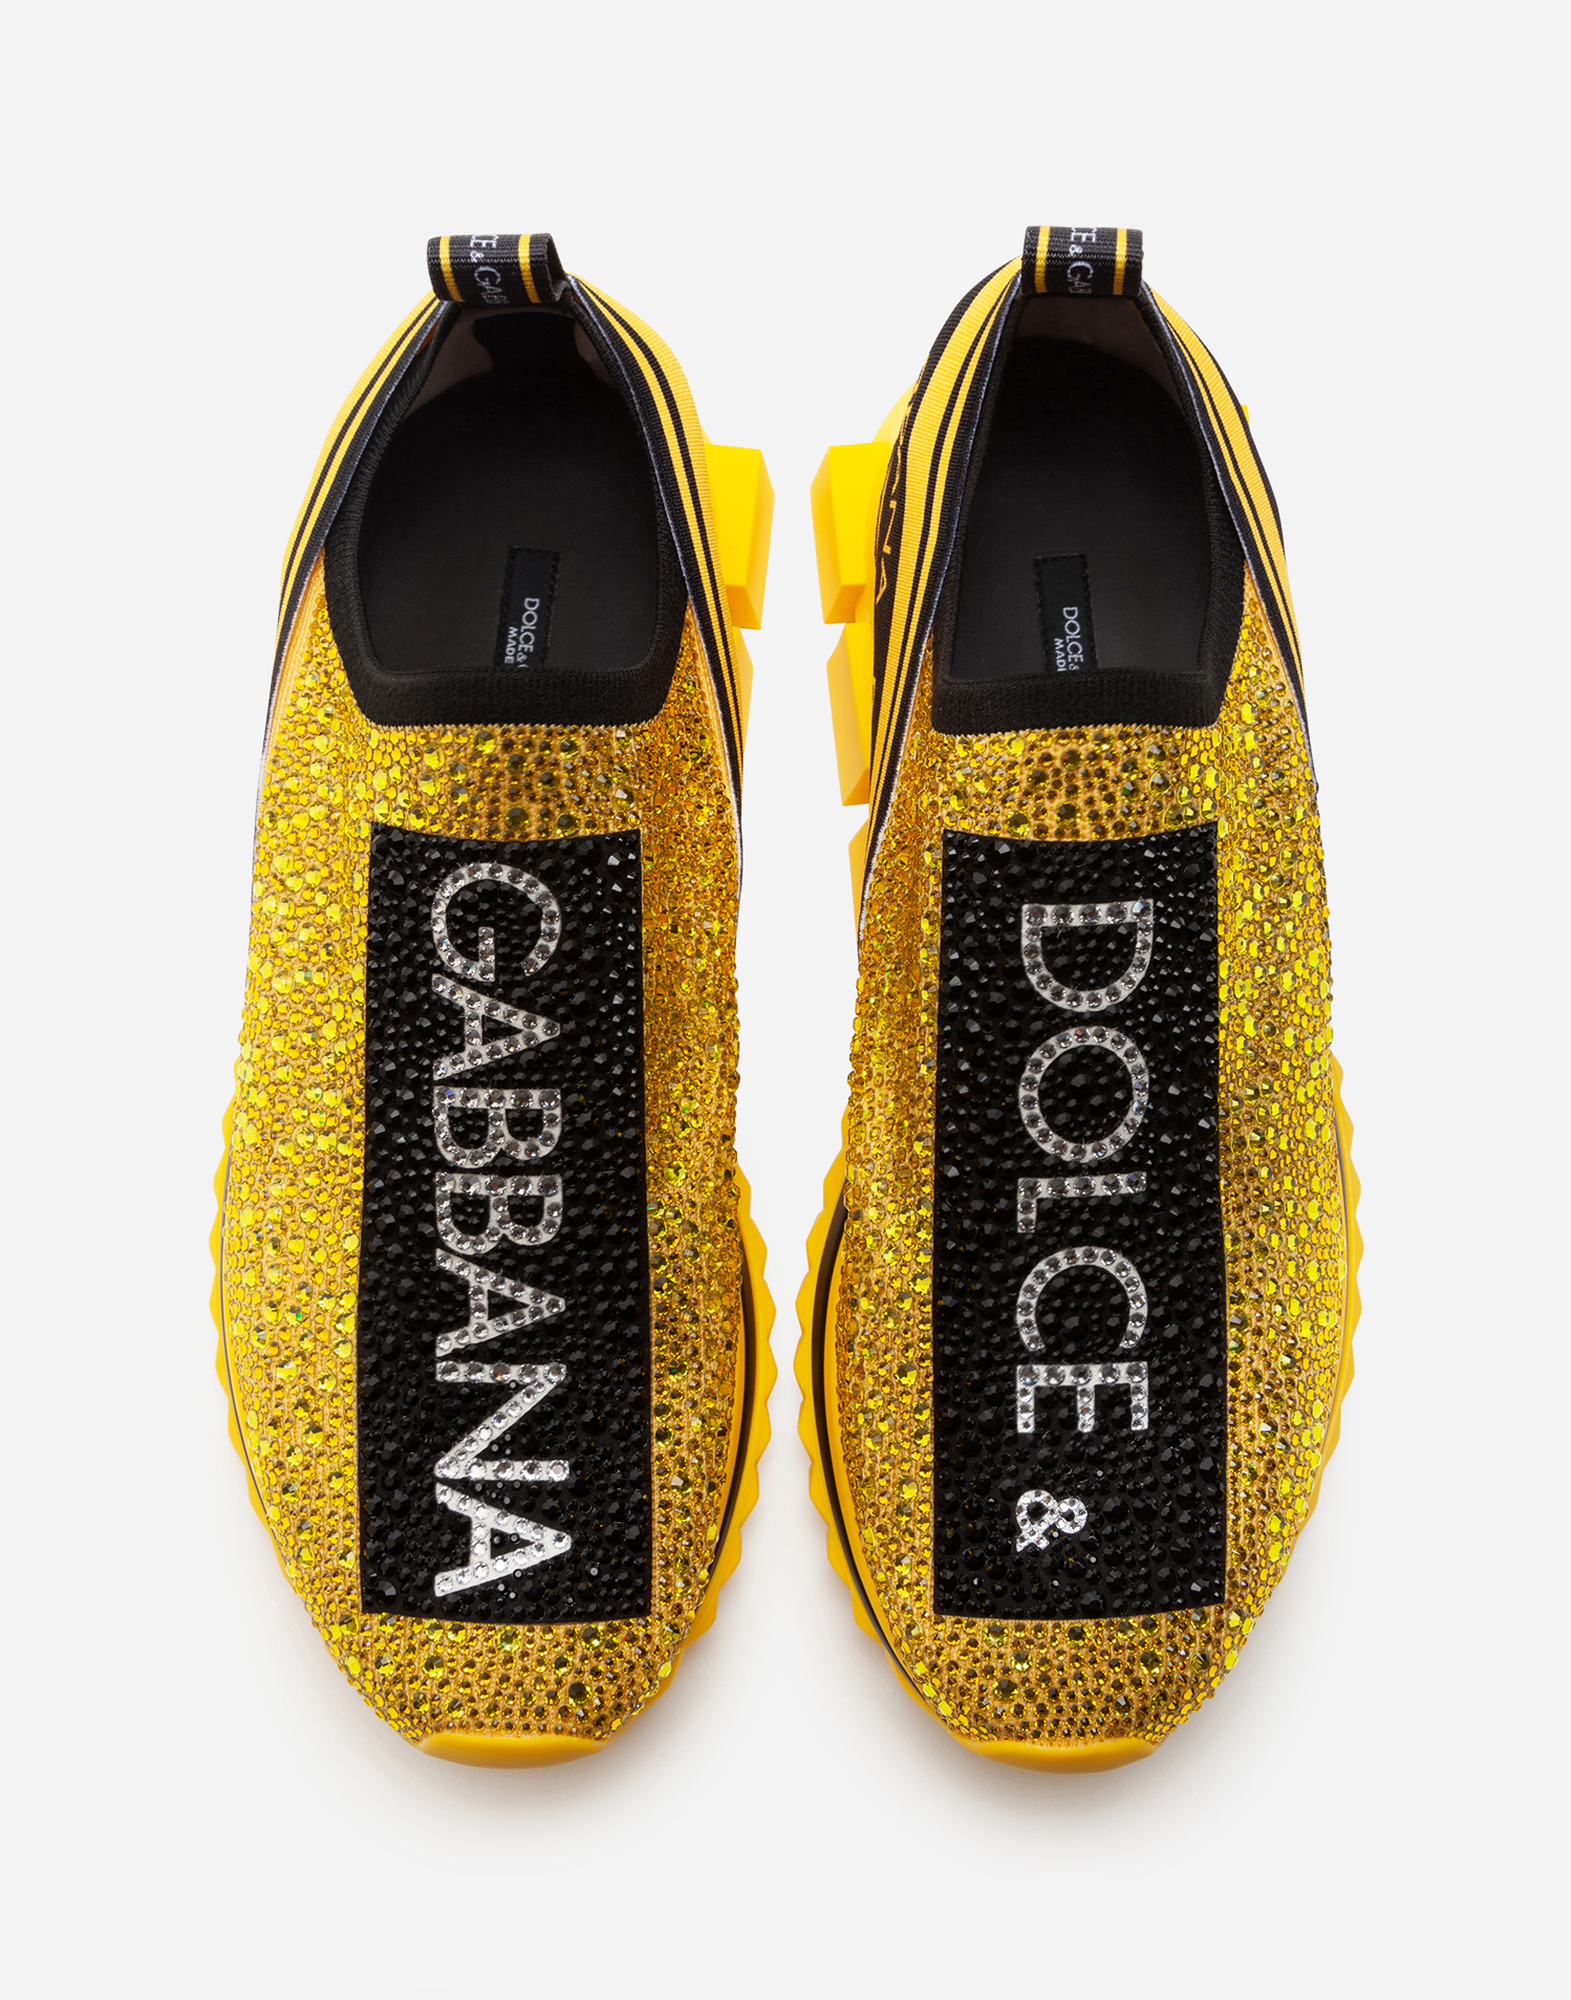 Дольче габбана желтые. Dolce Gabbana Sorrento. Dolce Gabbana Sneakers Yellow. Dolce Gabbana Sorrento Sneakers Crystals Yellow. Кроссовки Dolce Gabbana Sorrento с кристаллами.